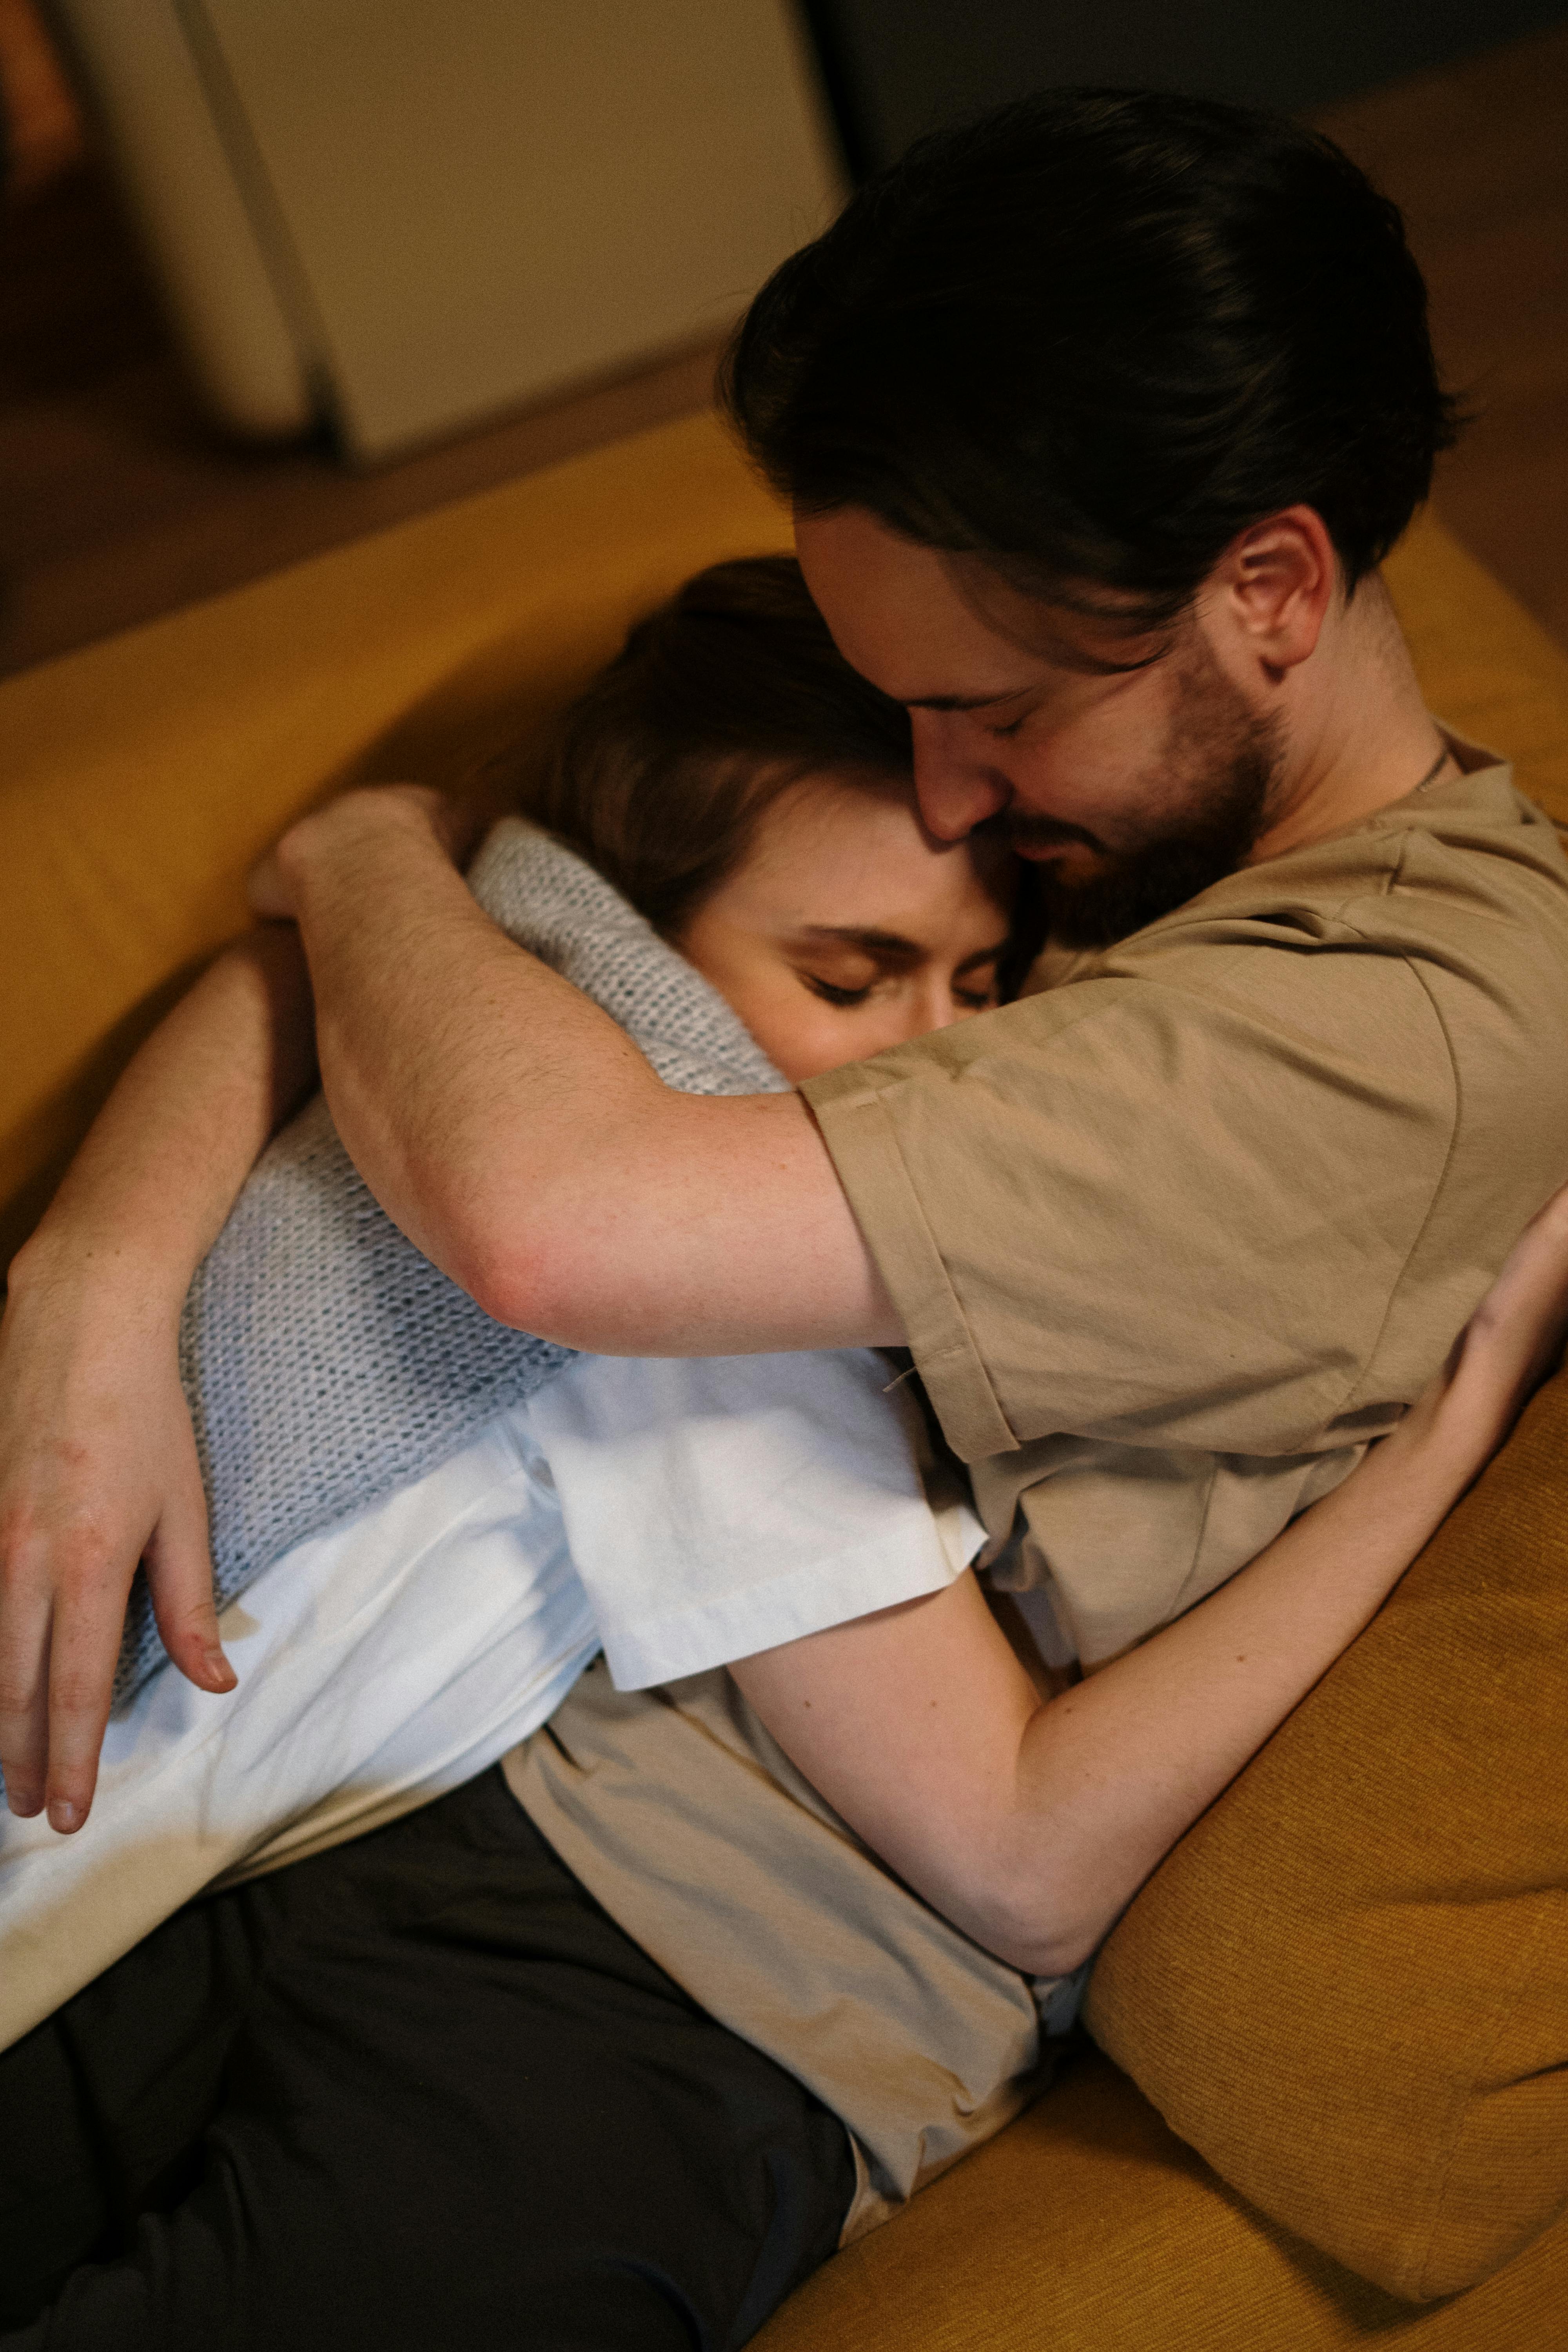 A couple hugging | Source: Pexels